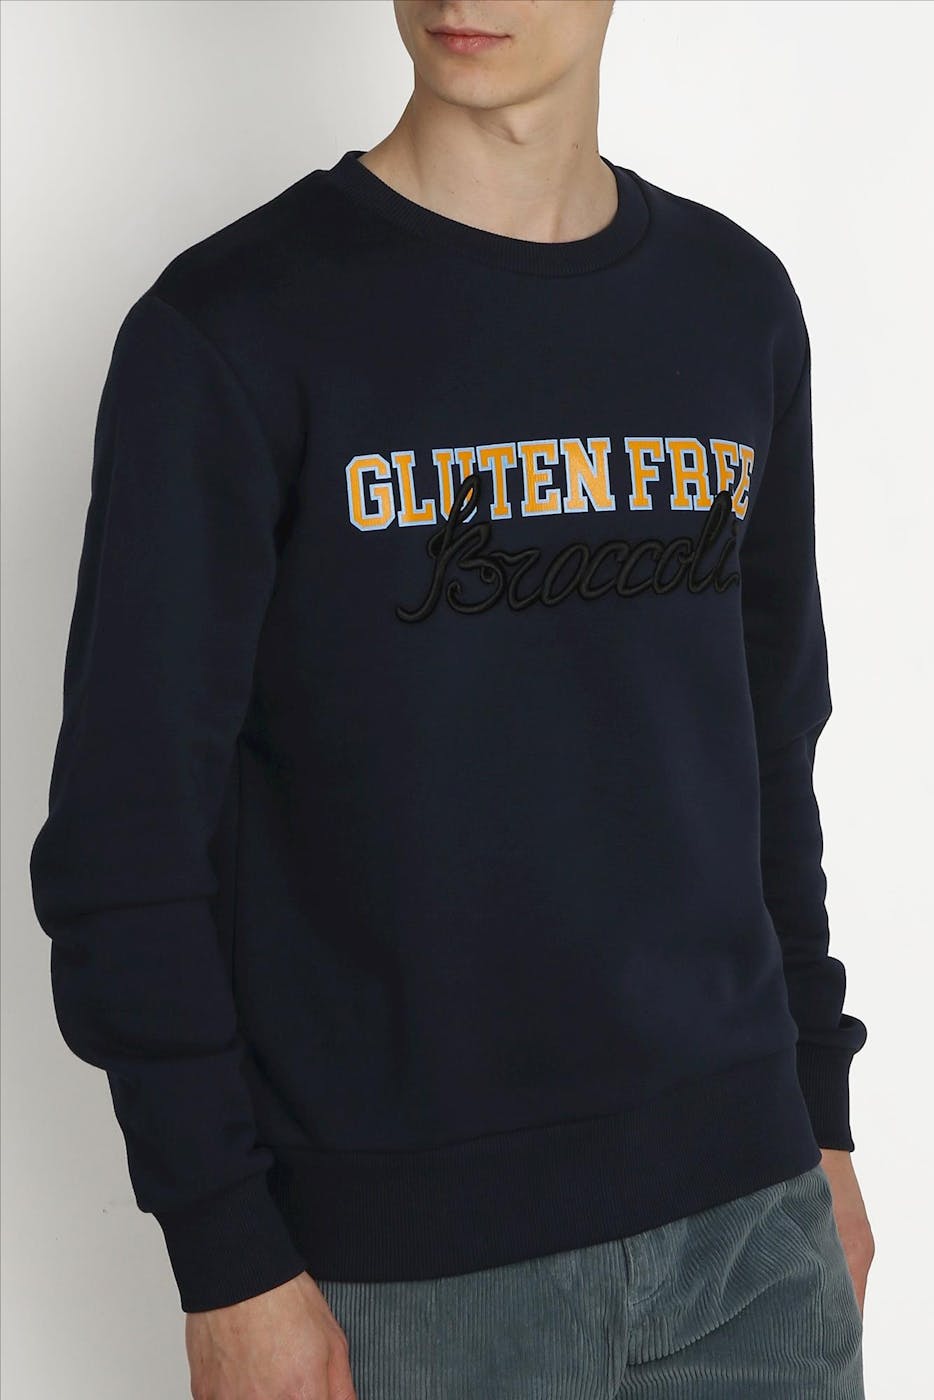 Antwrp - Donkerblauwe Gluten Free sweater